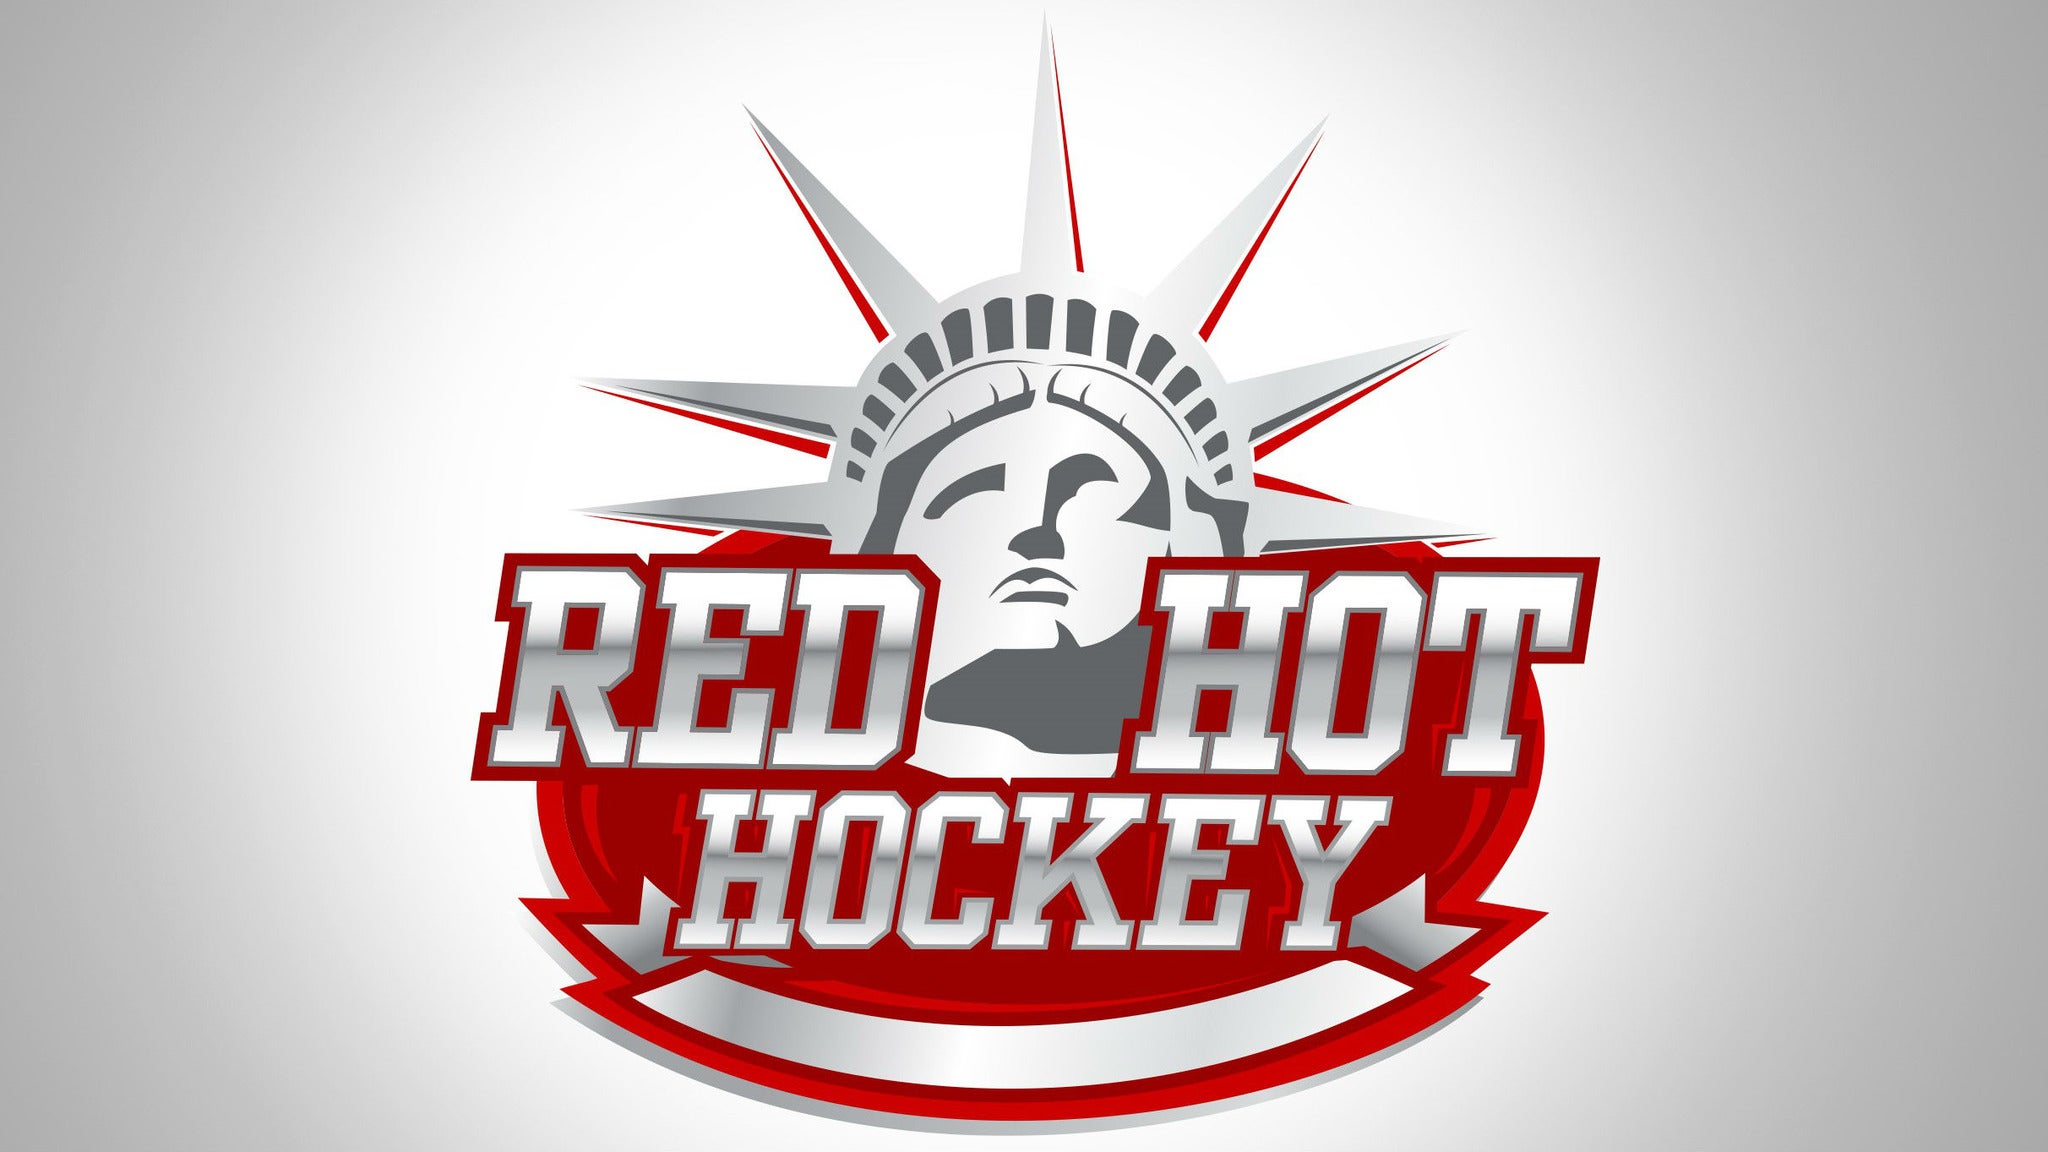 Red Hot Hockey presale information on freepresalepasswords.com